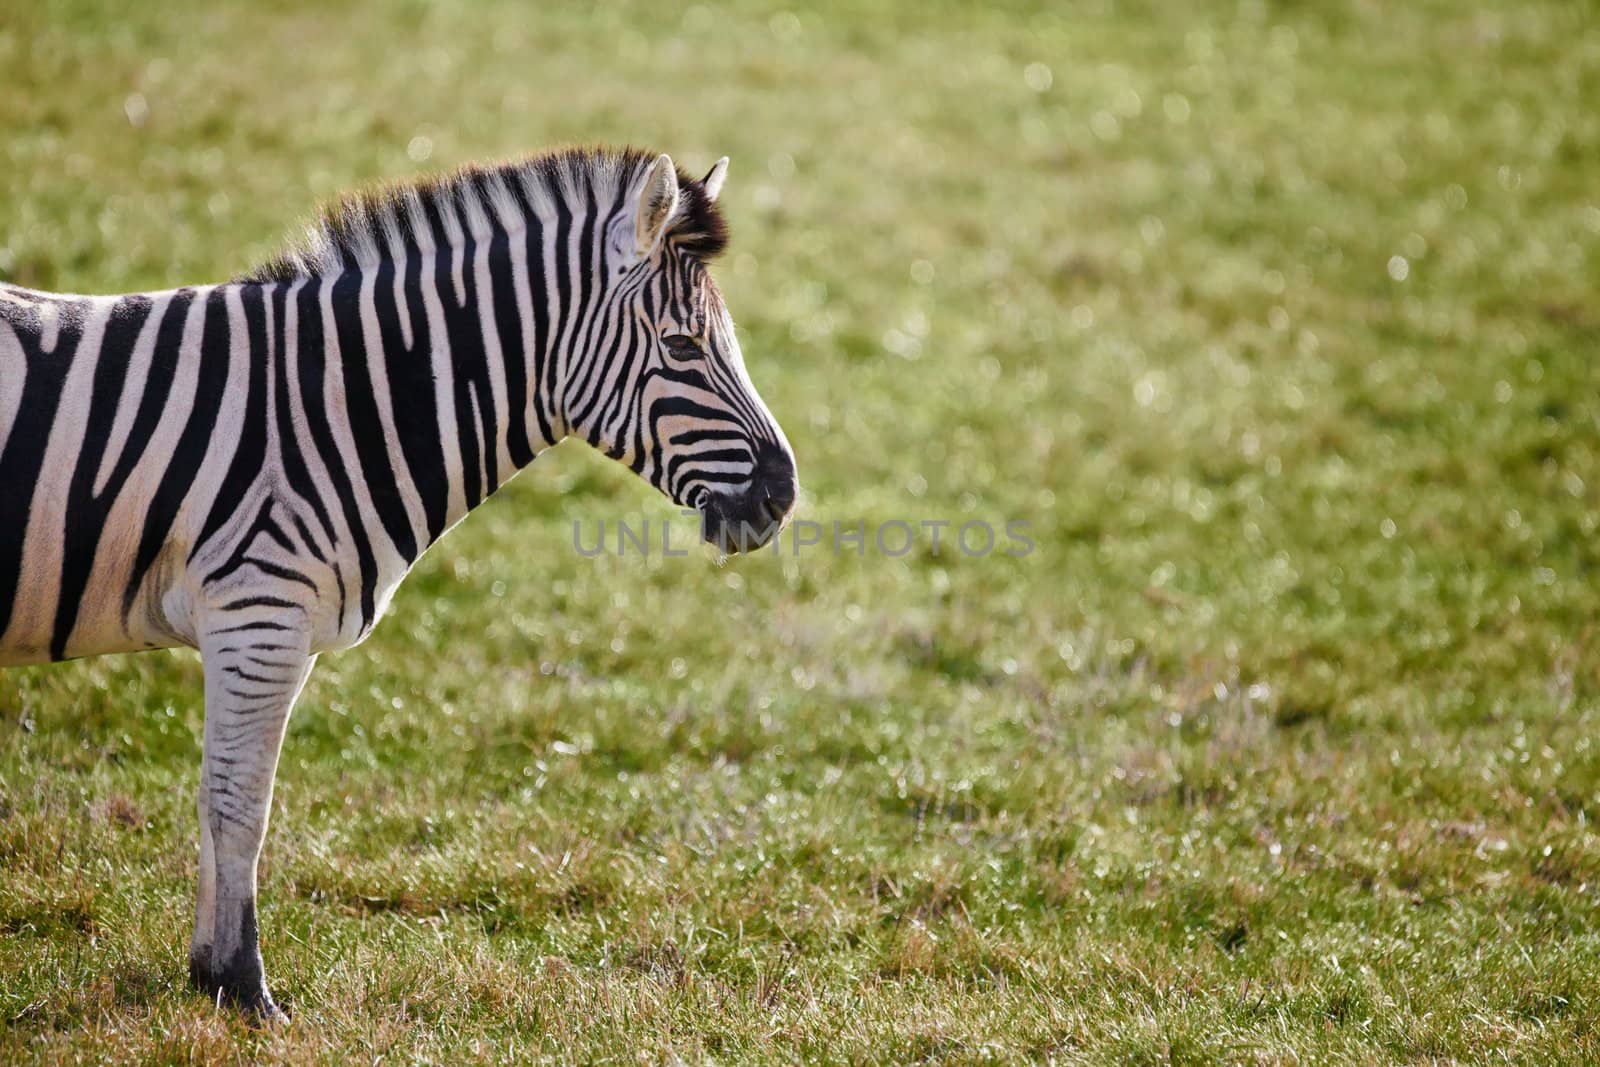 Lone Zebra Grass Field by bobkeenan